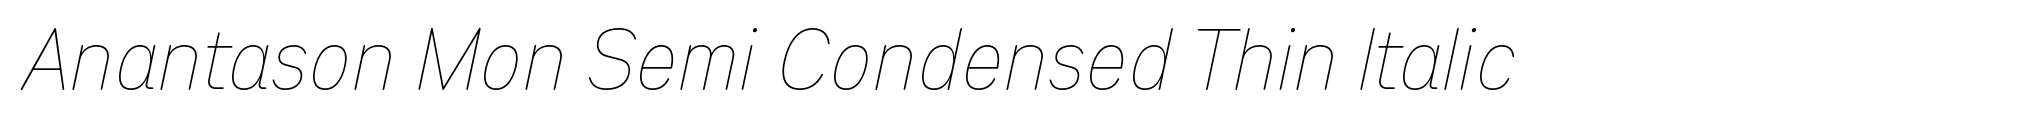 Anantason Mon Semi Condensed Thin Italic image